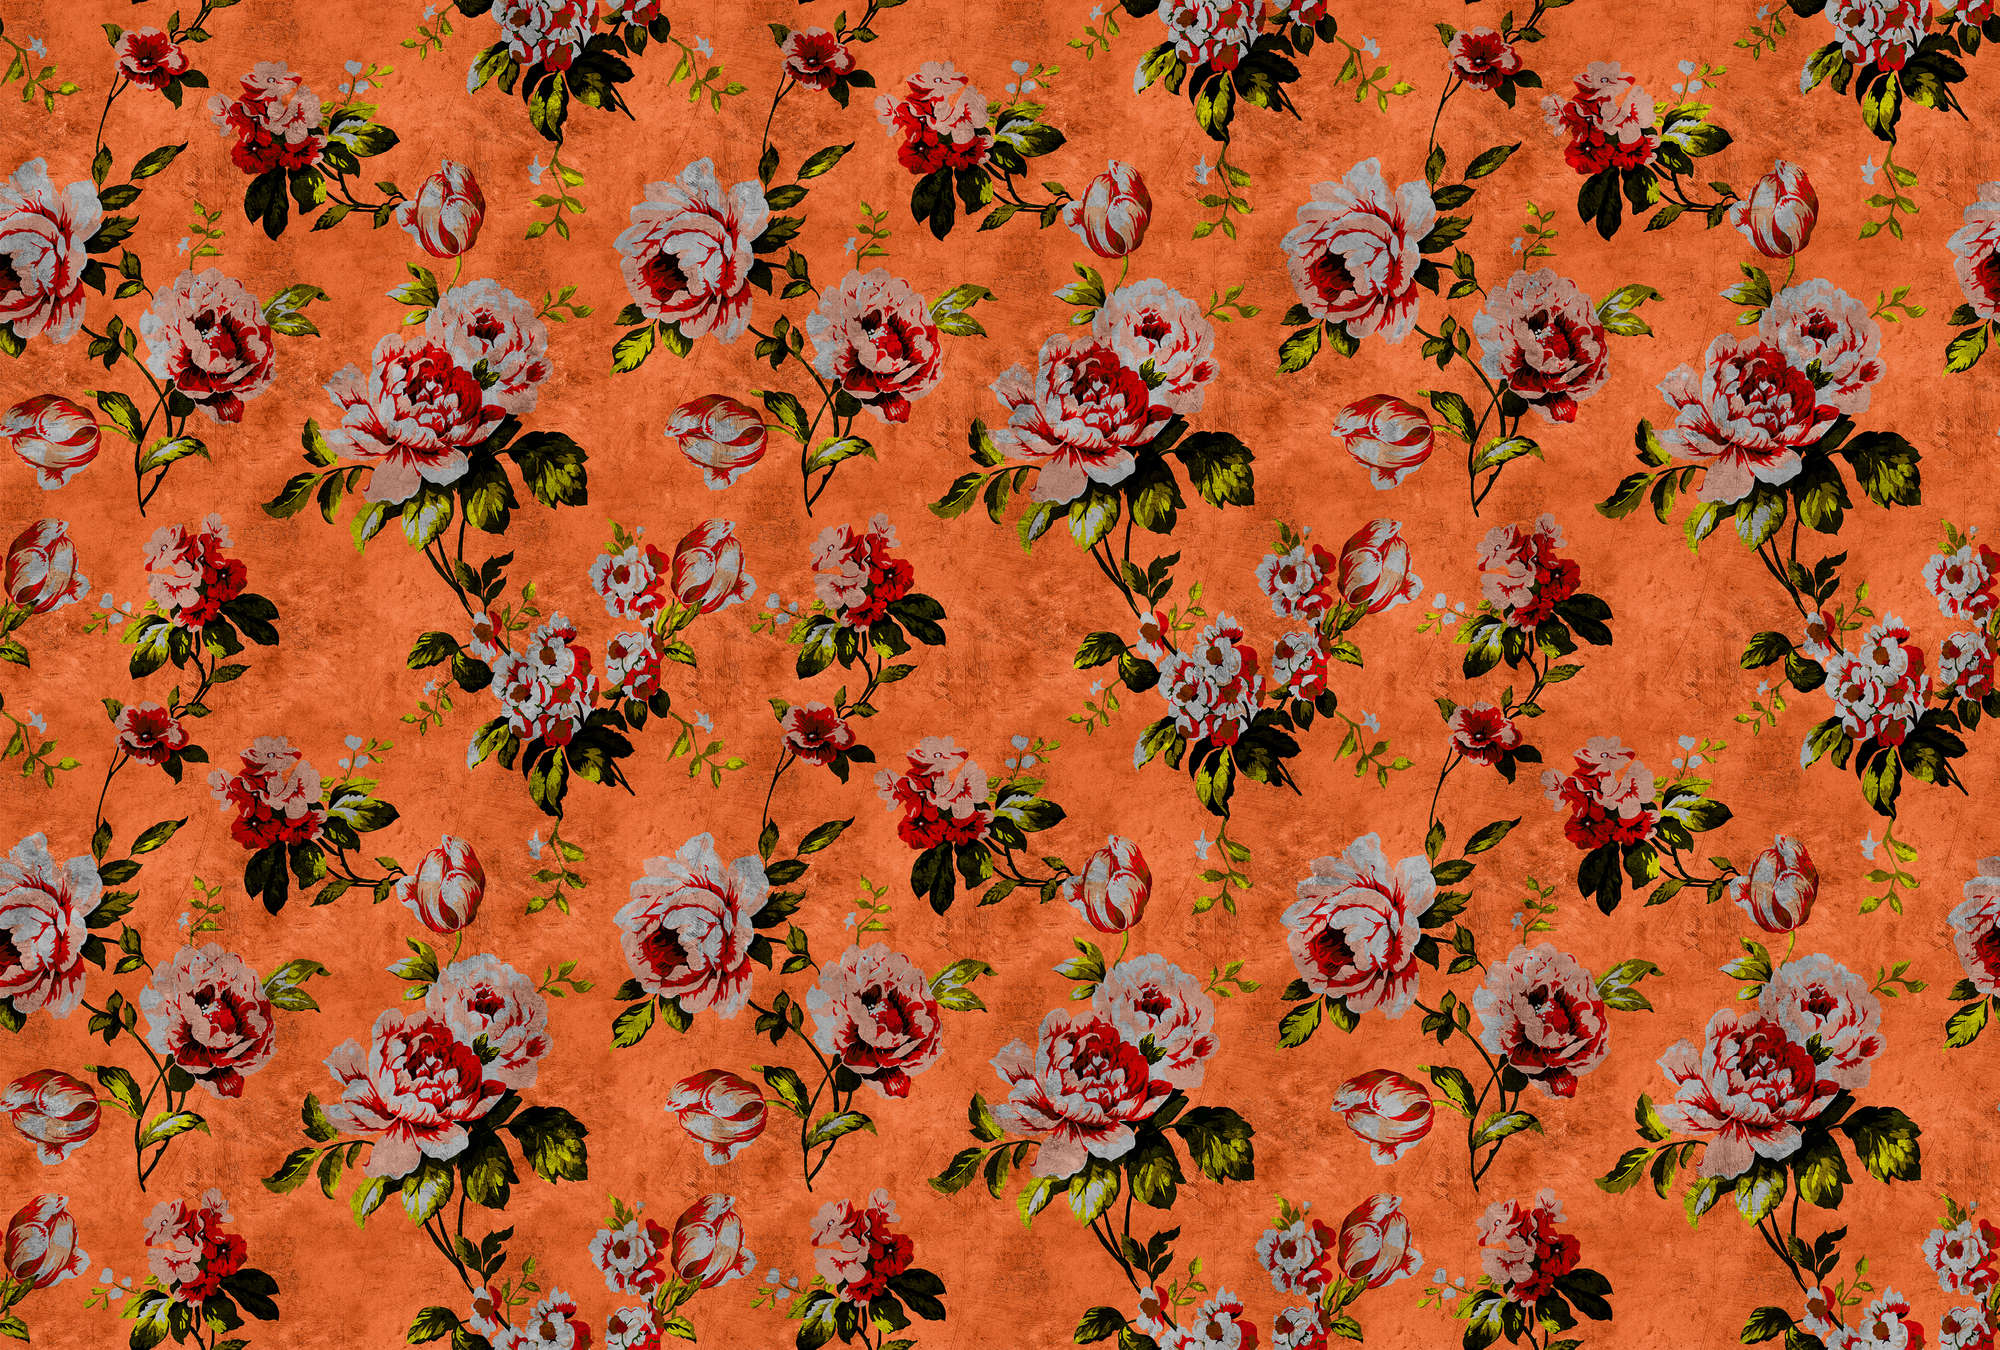             Wild roses 2 - Roses photo wallpaper in scratchy structure in retro look, Orange - Yellow, Orange | Matt smooth fleece
        